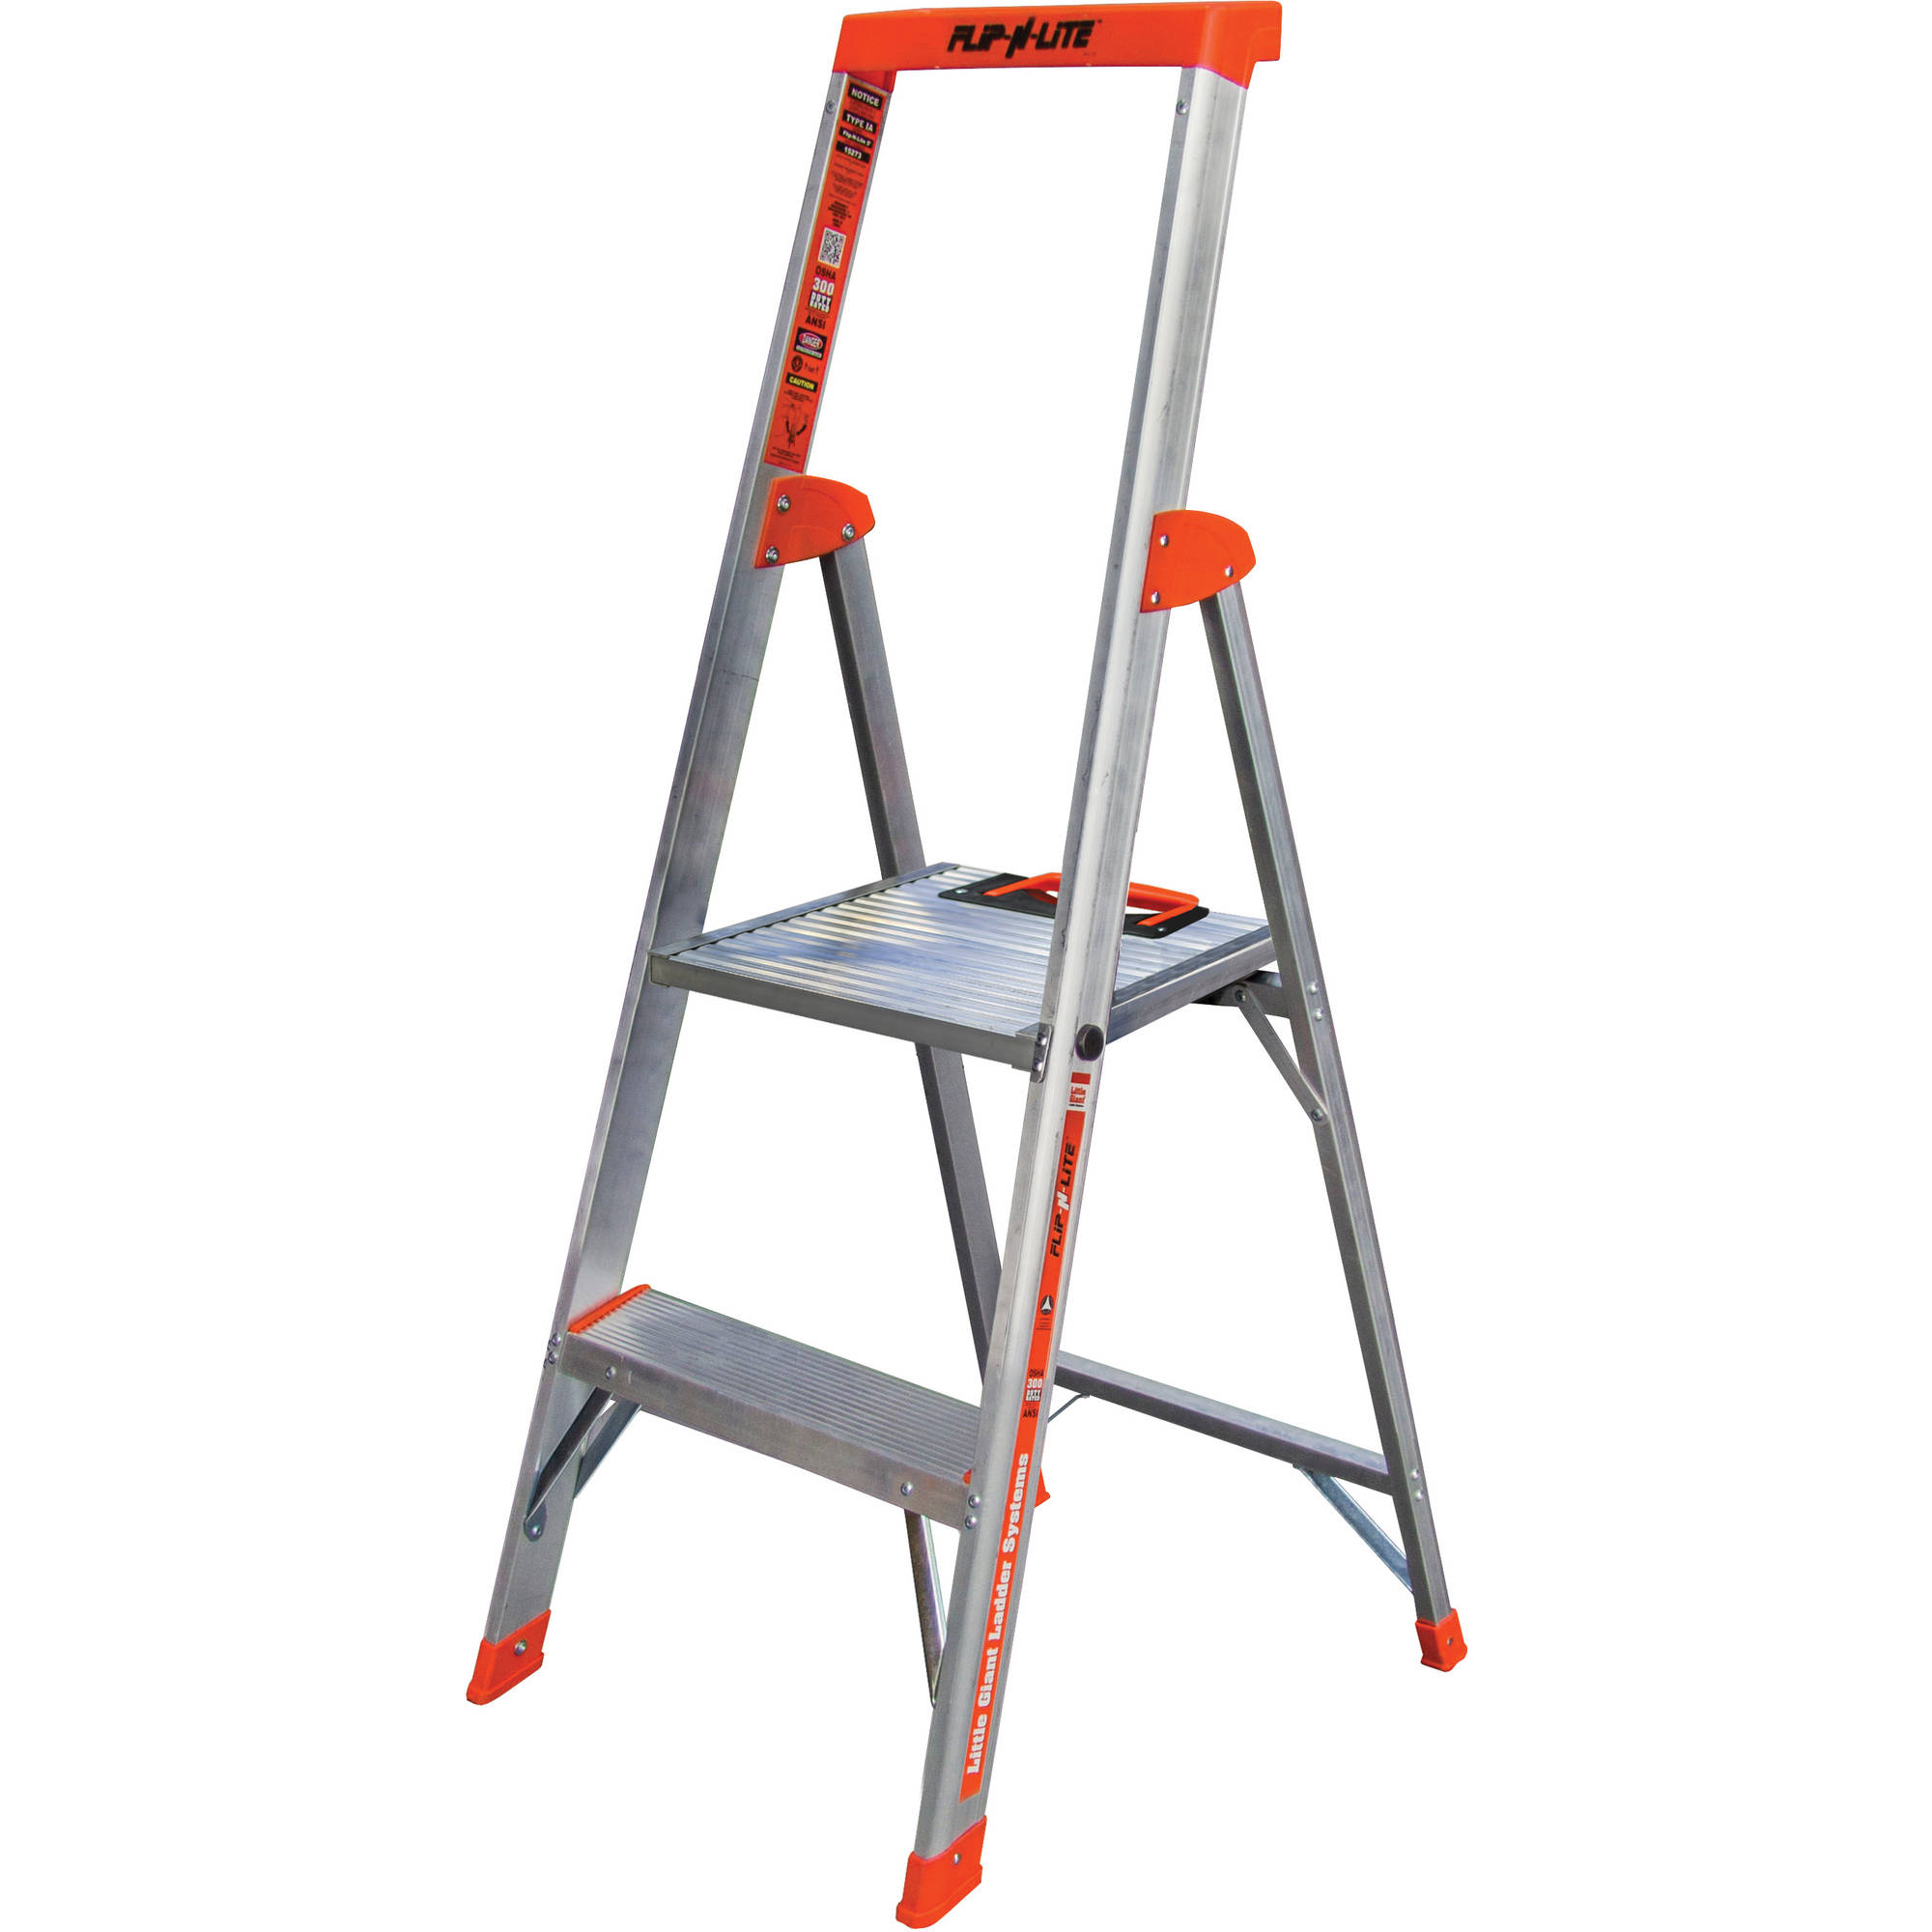 Little Giant Classic M26 Ladder - Walmart.com